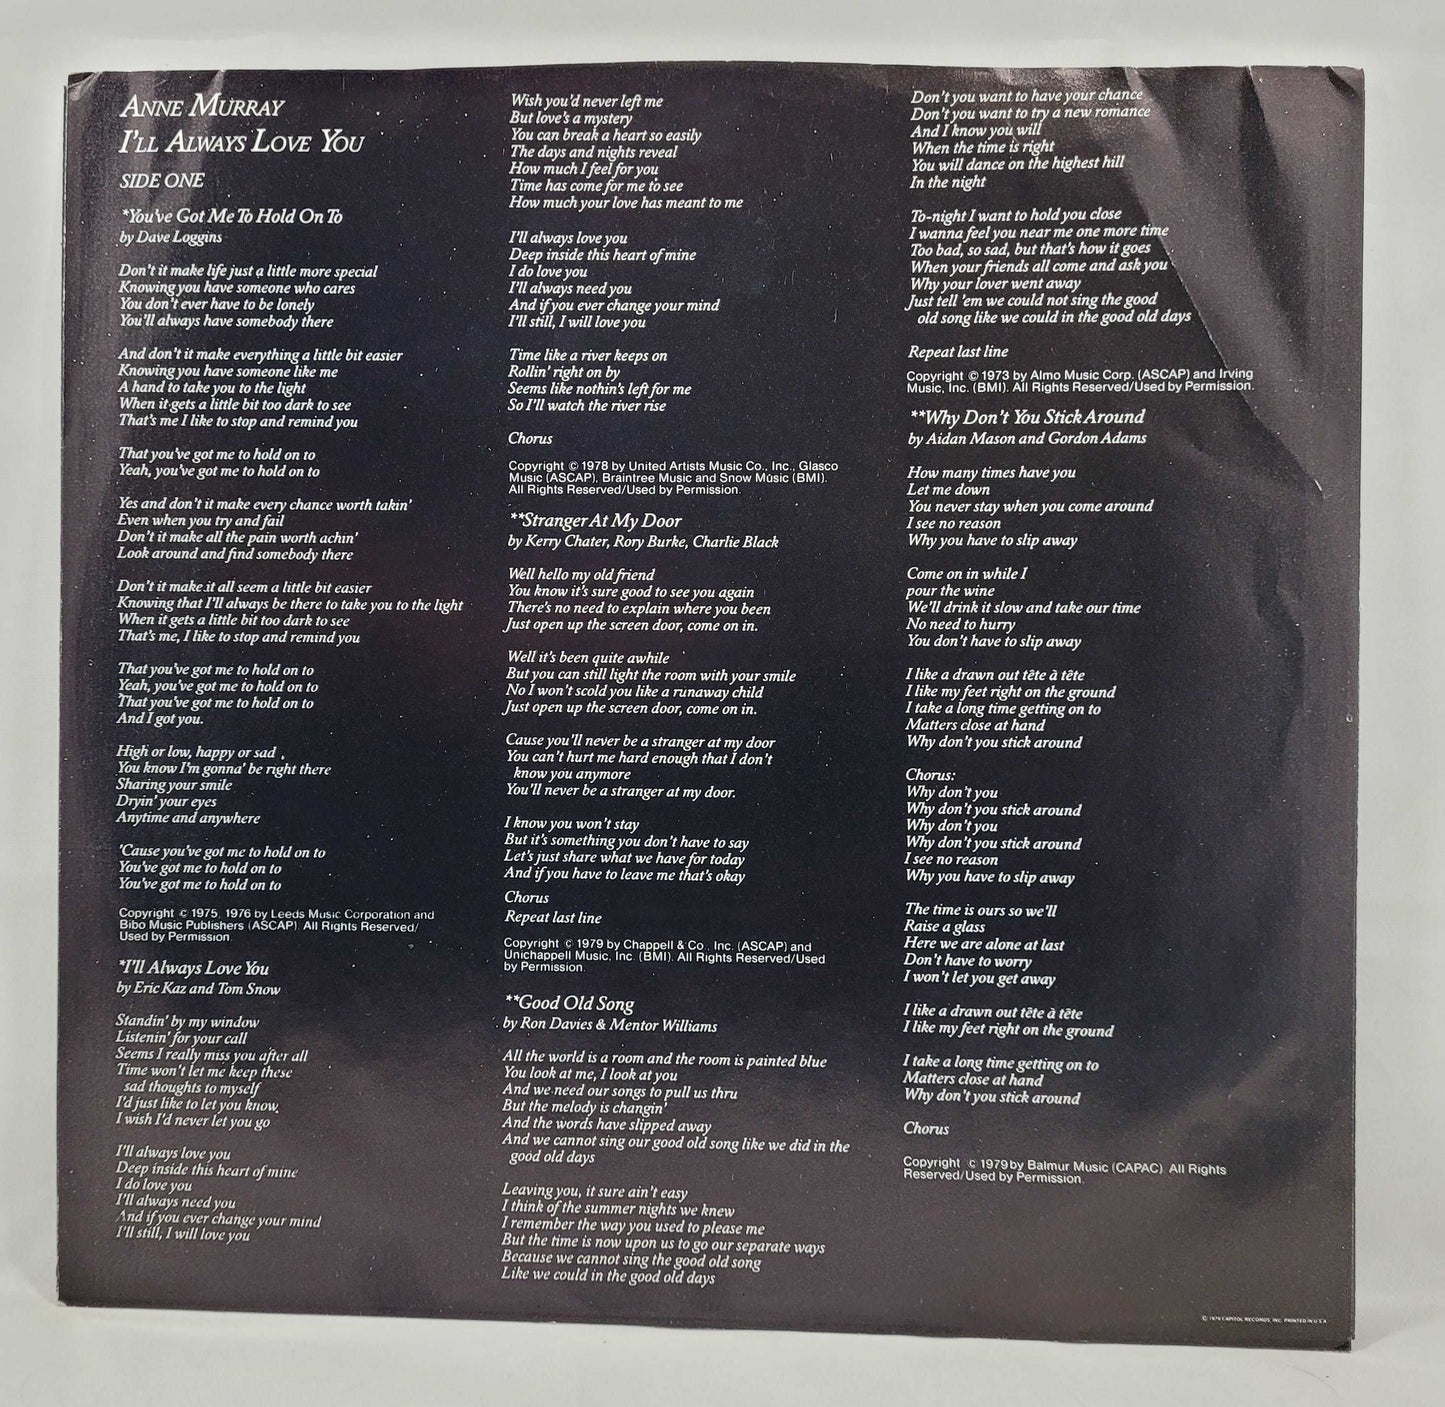 Anne Murray - I'll Always Love You [1979 Club Edition] [Used Vinyl Record LP]